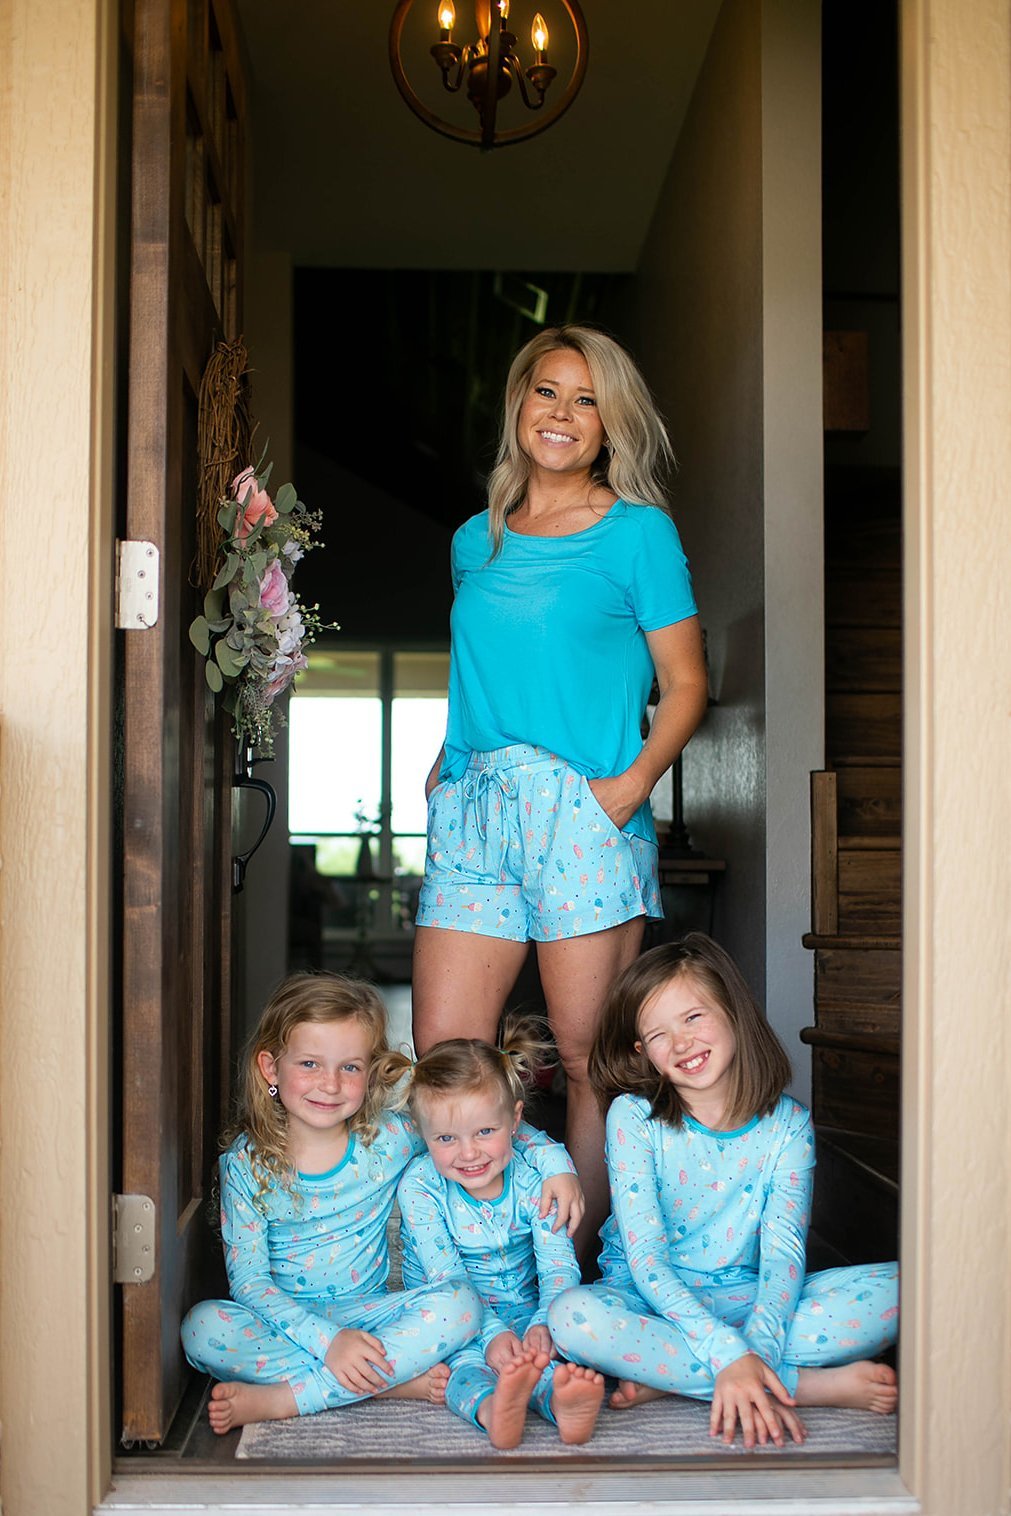 Aqua Popsicles Women's Short Sleeve & Shorts Pajama Set